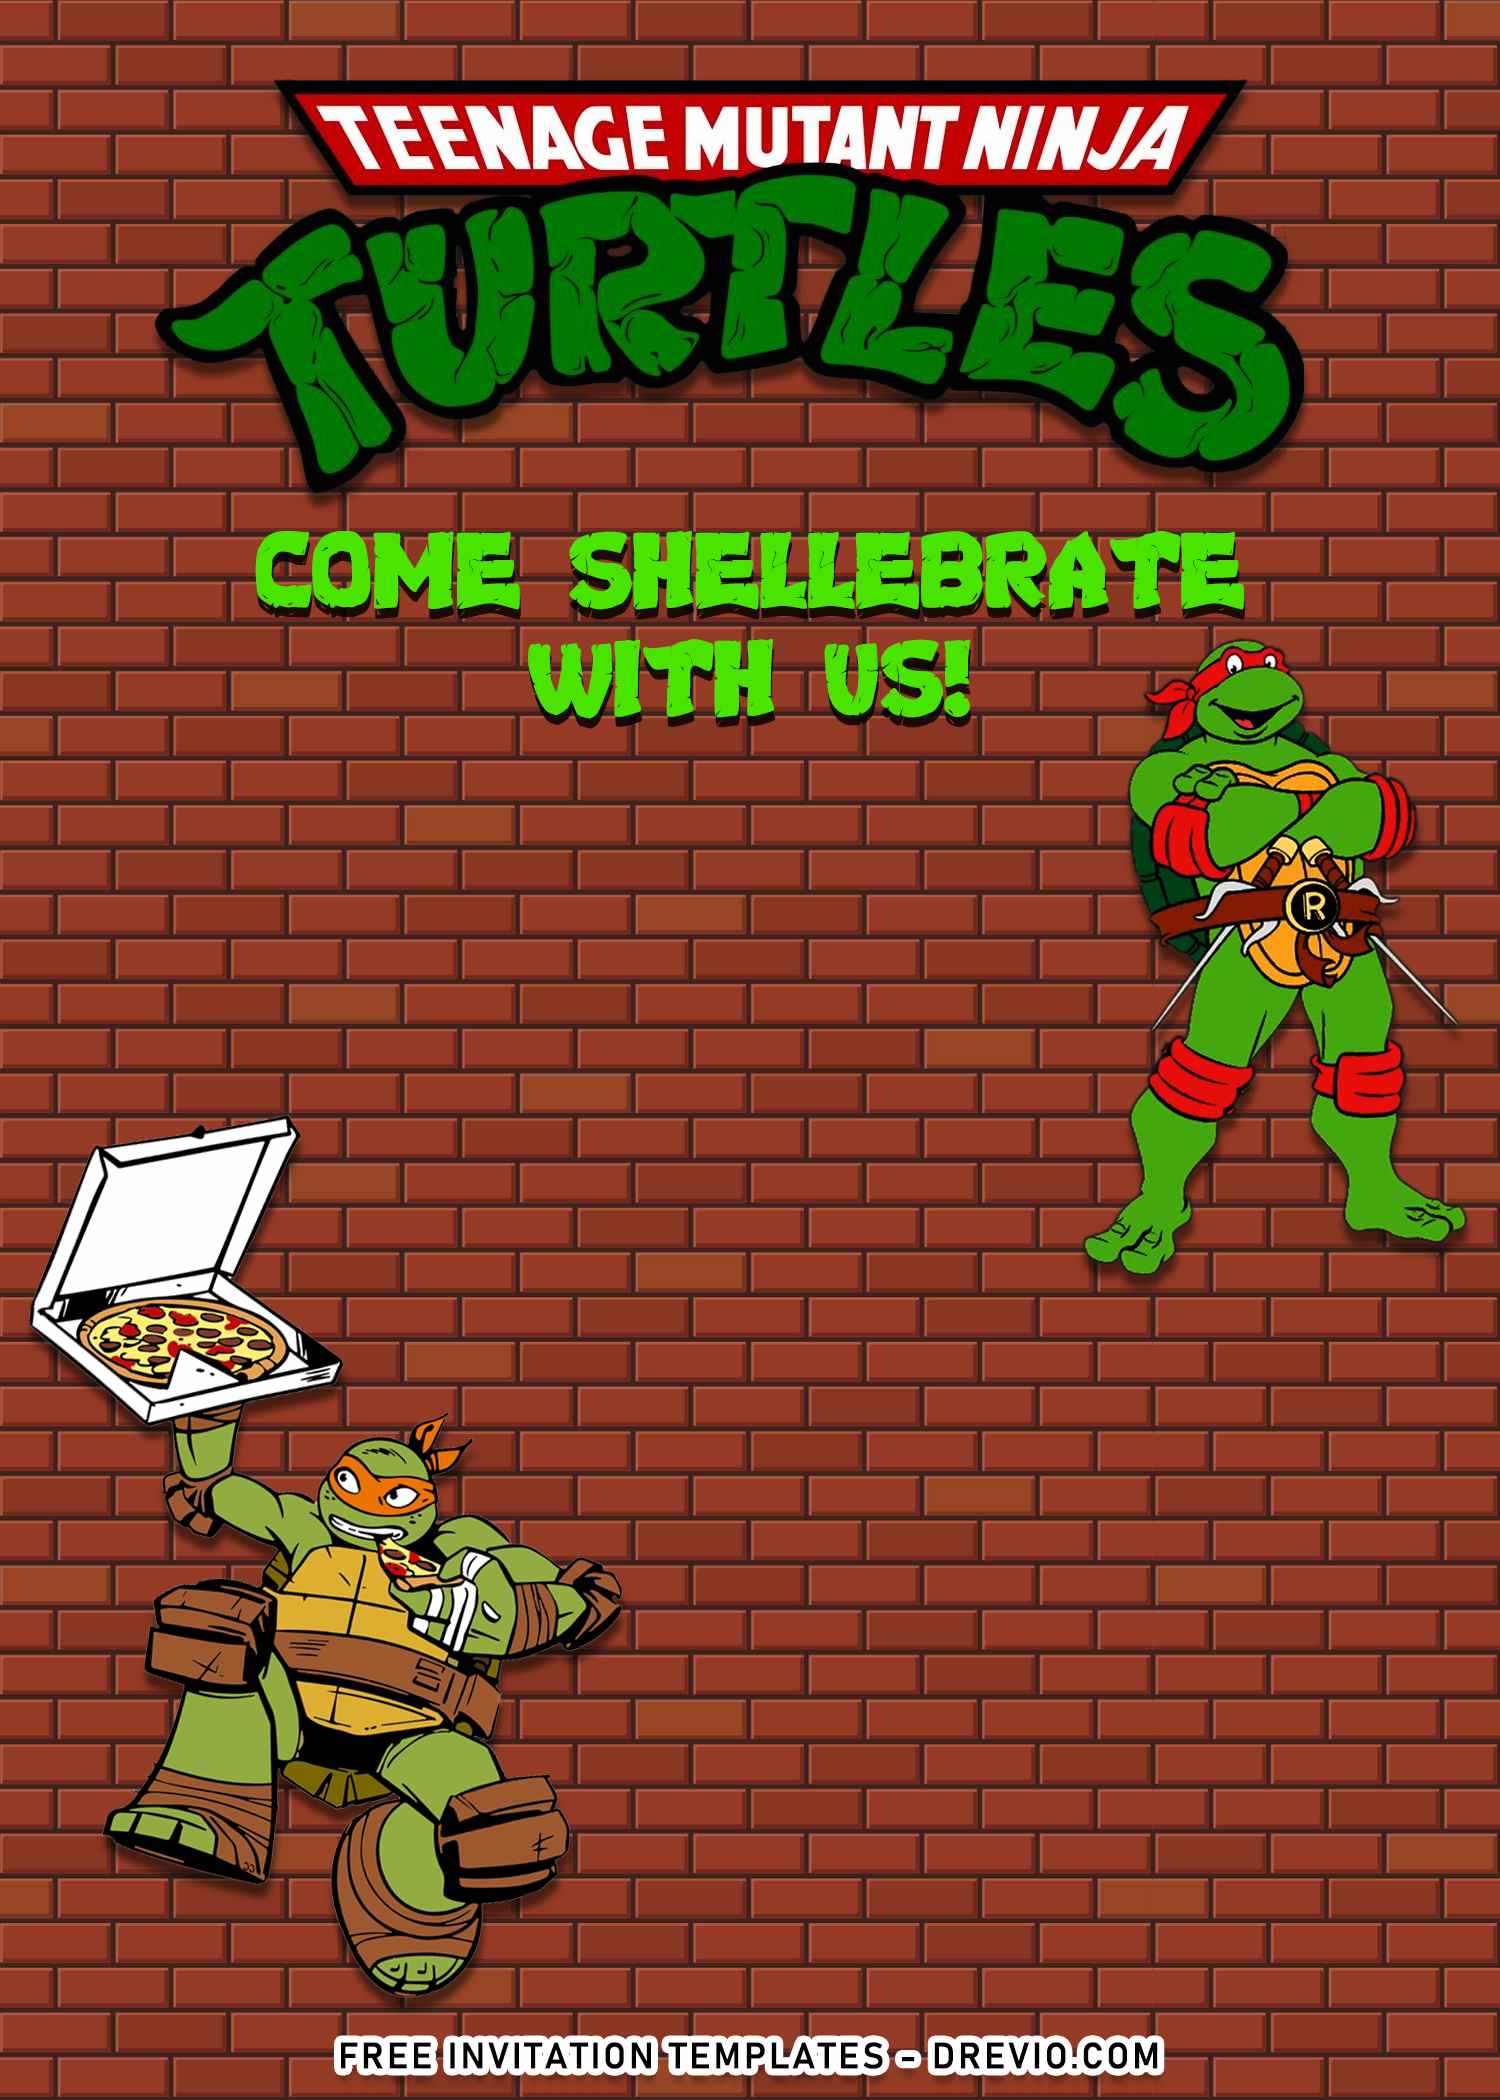 download-now-free-printable-ninja-turtle-birthday-party-invitations-turtle-birthday